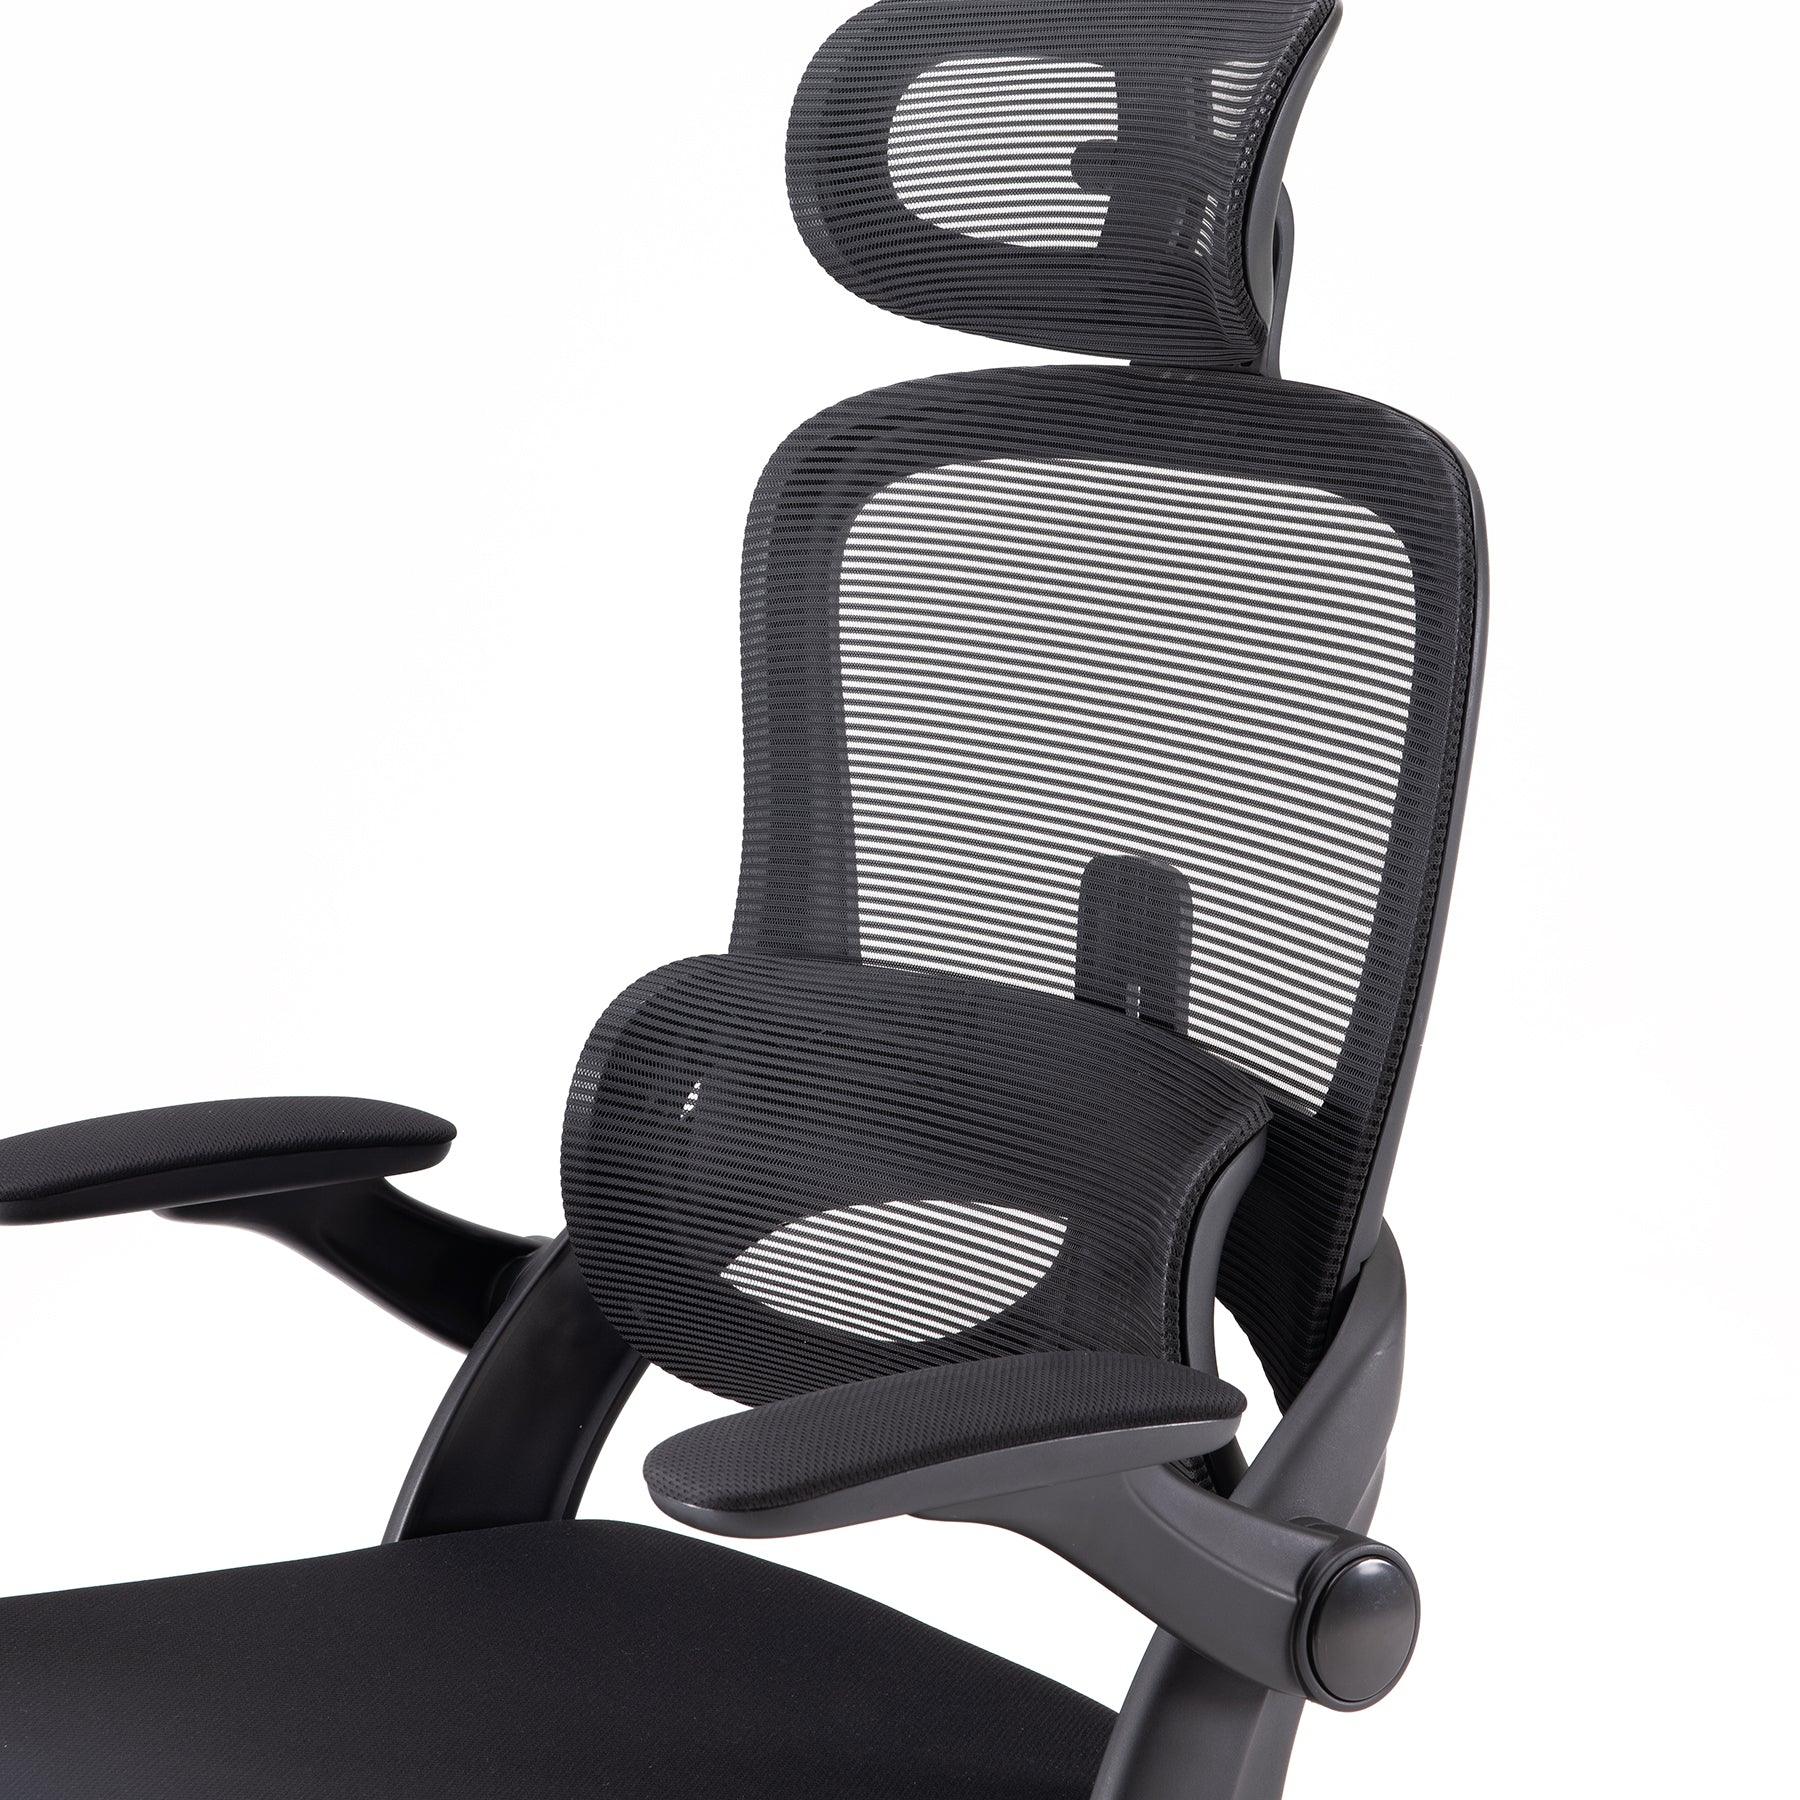 SIHOO M57 Ergonomic Office Chair with Premium Mesh Seat, Headrest